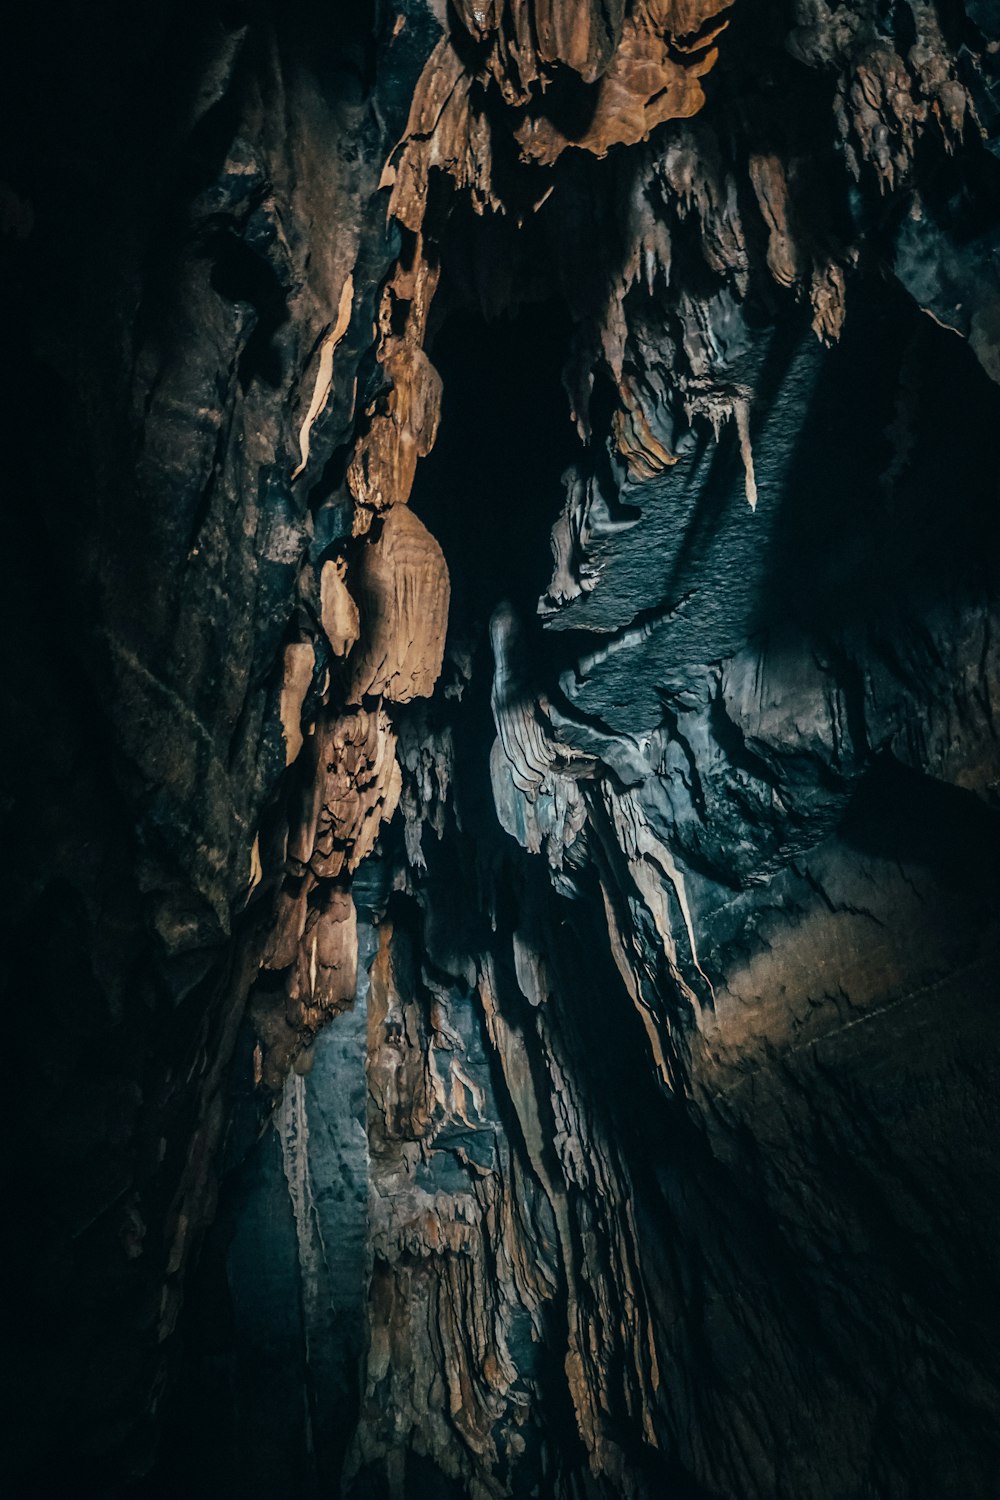 Grotte de la roche brune